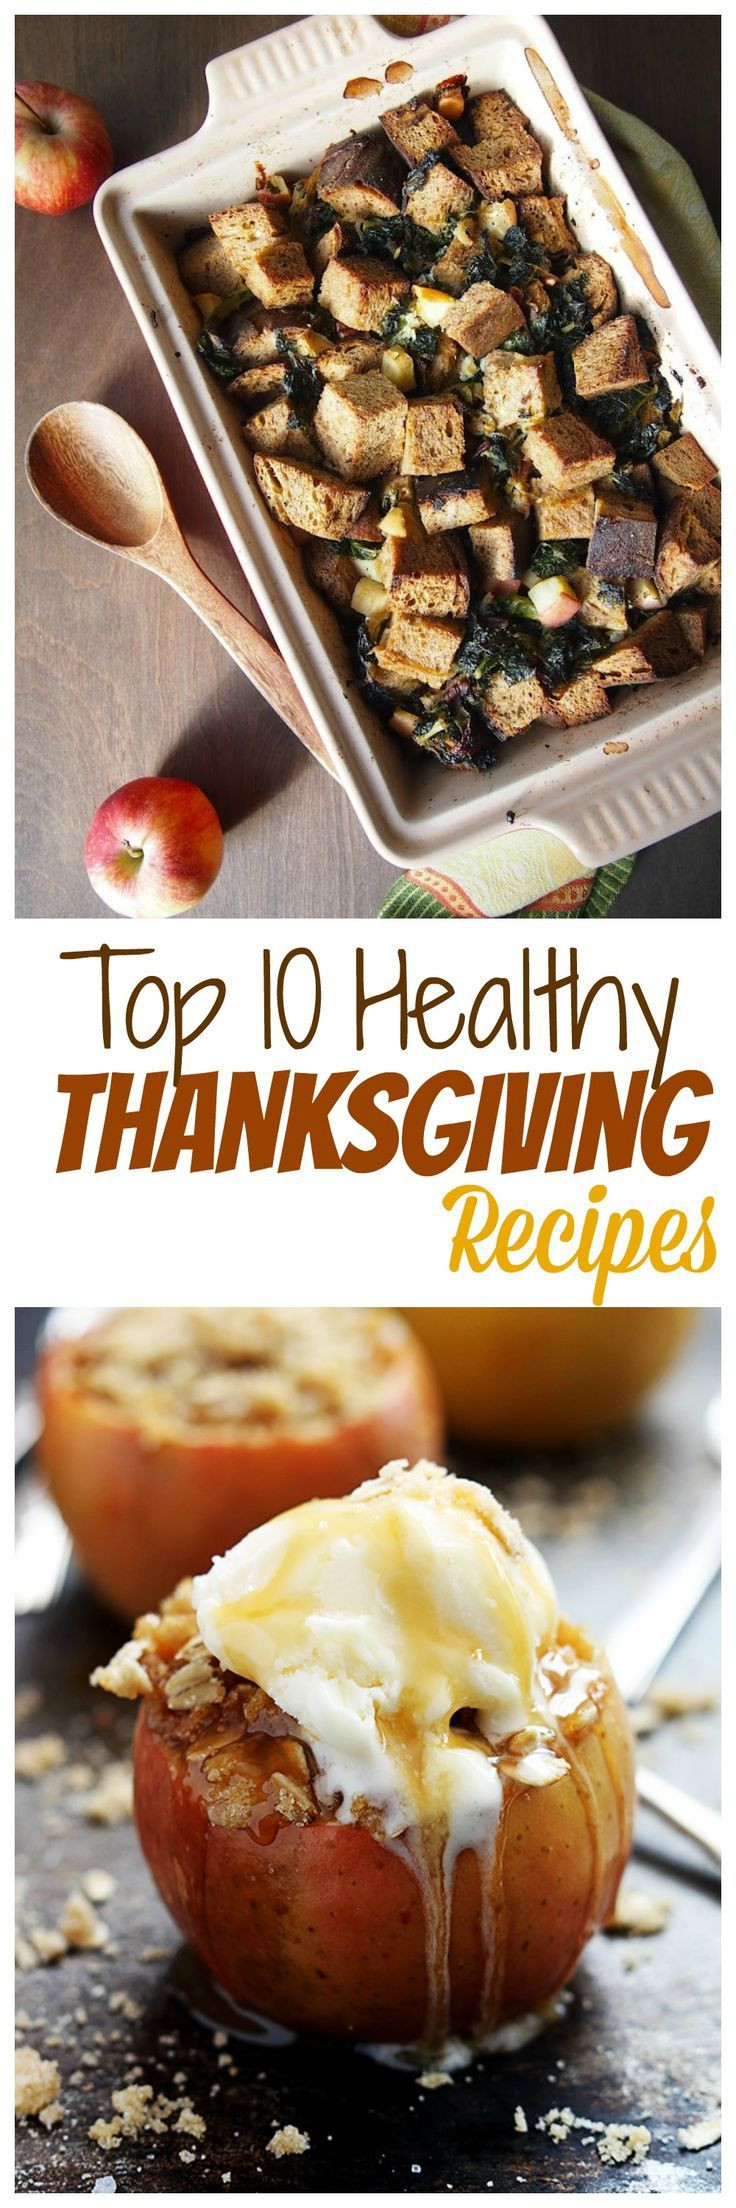 Low Calorie Thanksgiving Desserts
 10 Best Healthy Thanksgiving Recipes for Low Calorie Sides